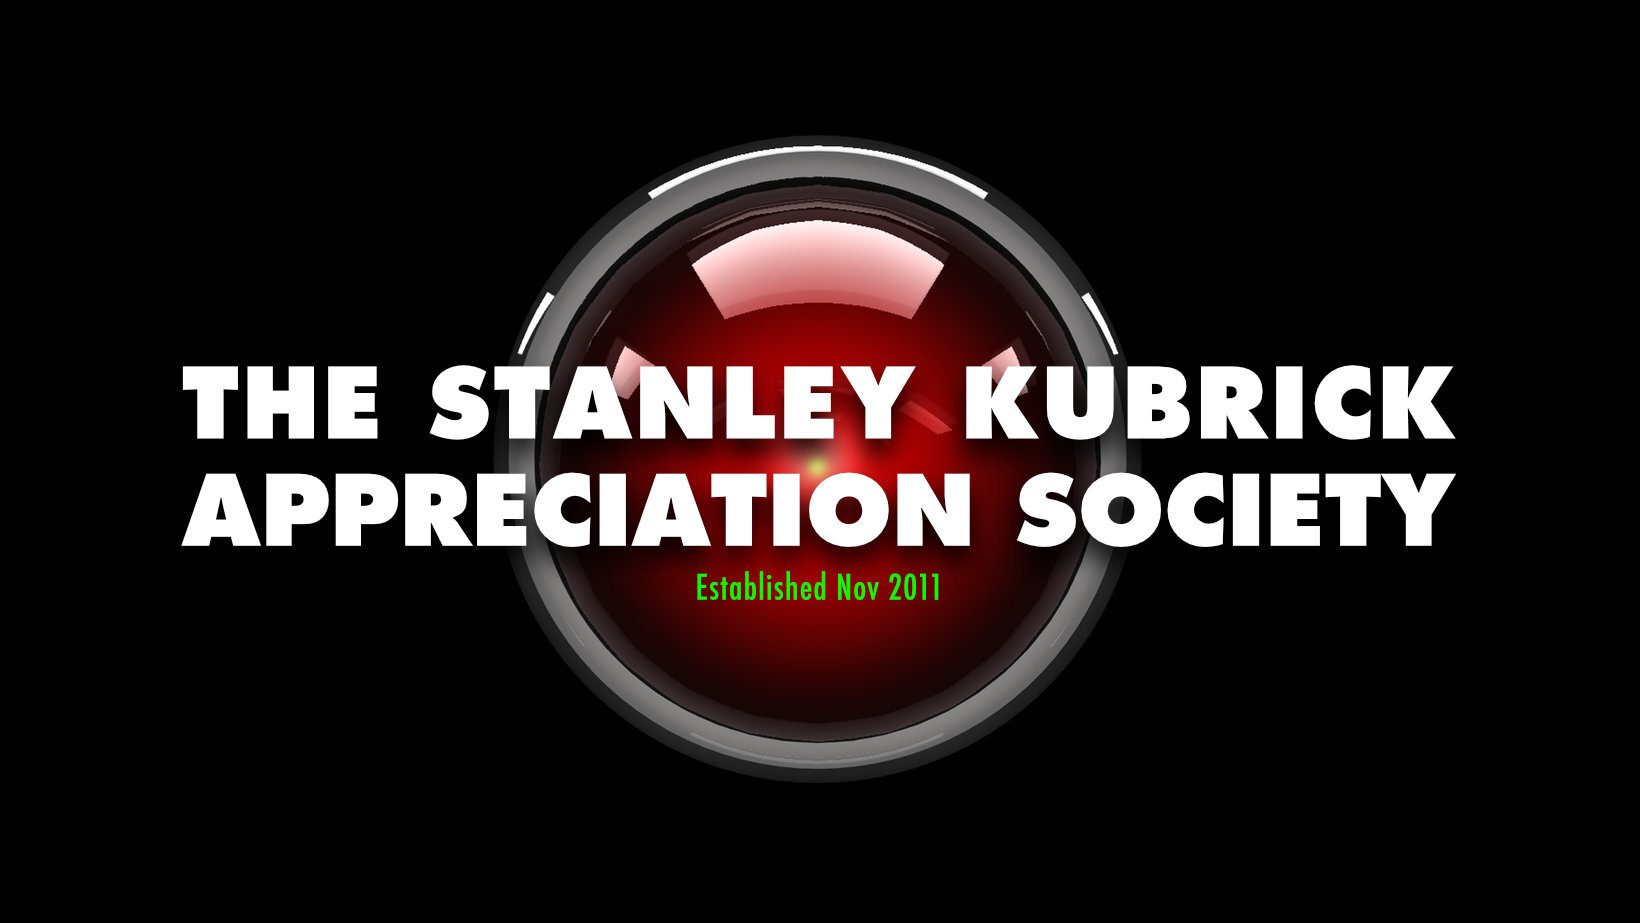 The Stanley Kubrick Appreciation Society